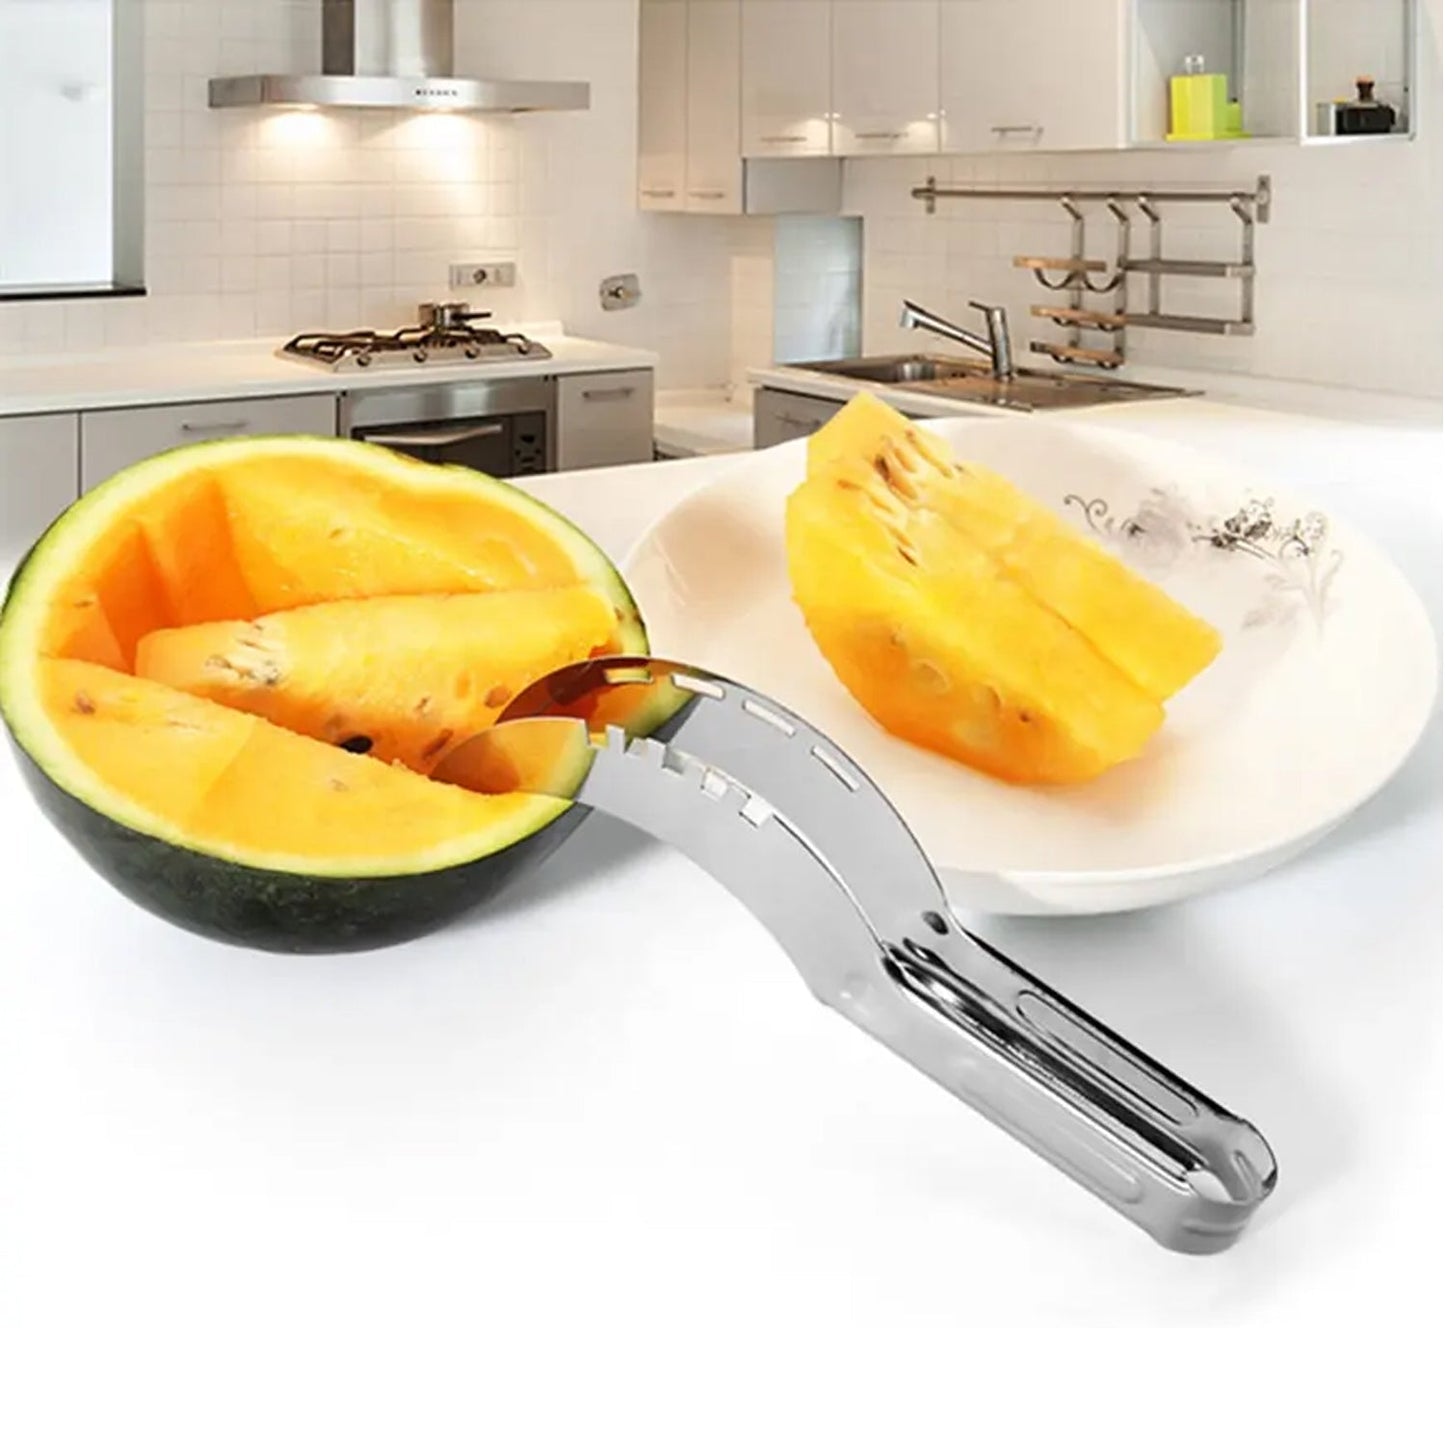 2859 Stainless Steel Watermelon Cantaloupe Slicer Knife, Corer Fruit, Vegetable Tools Kitchen